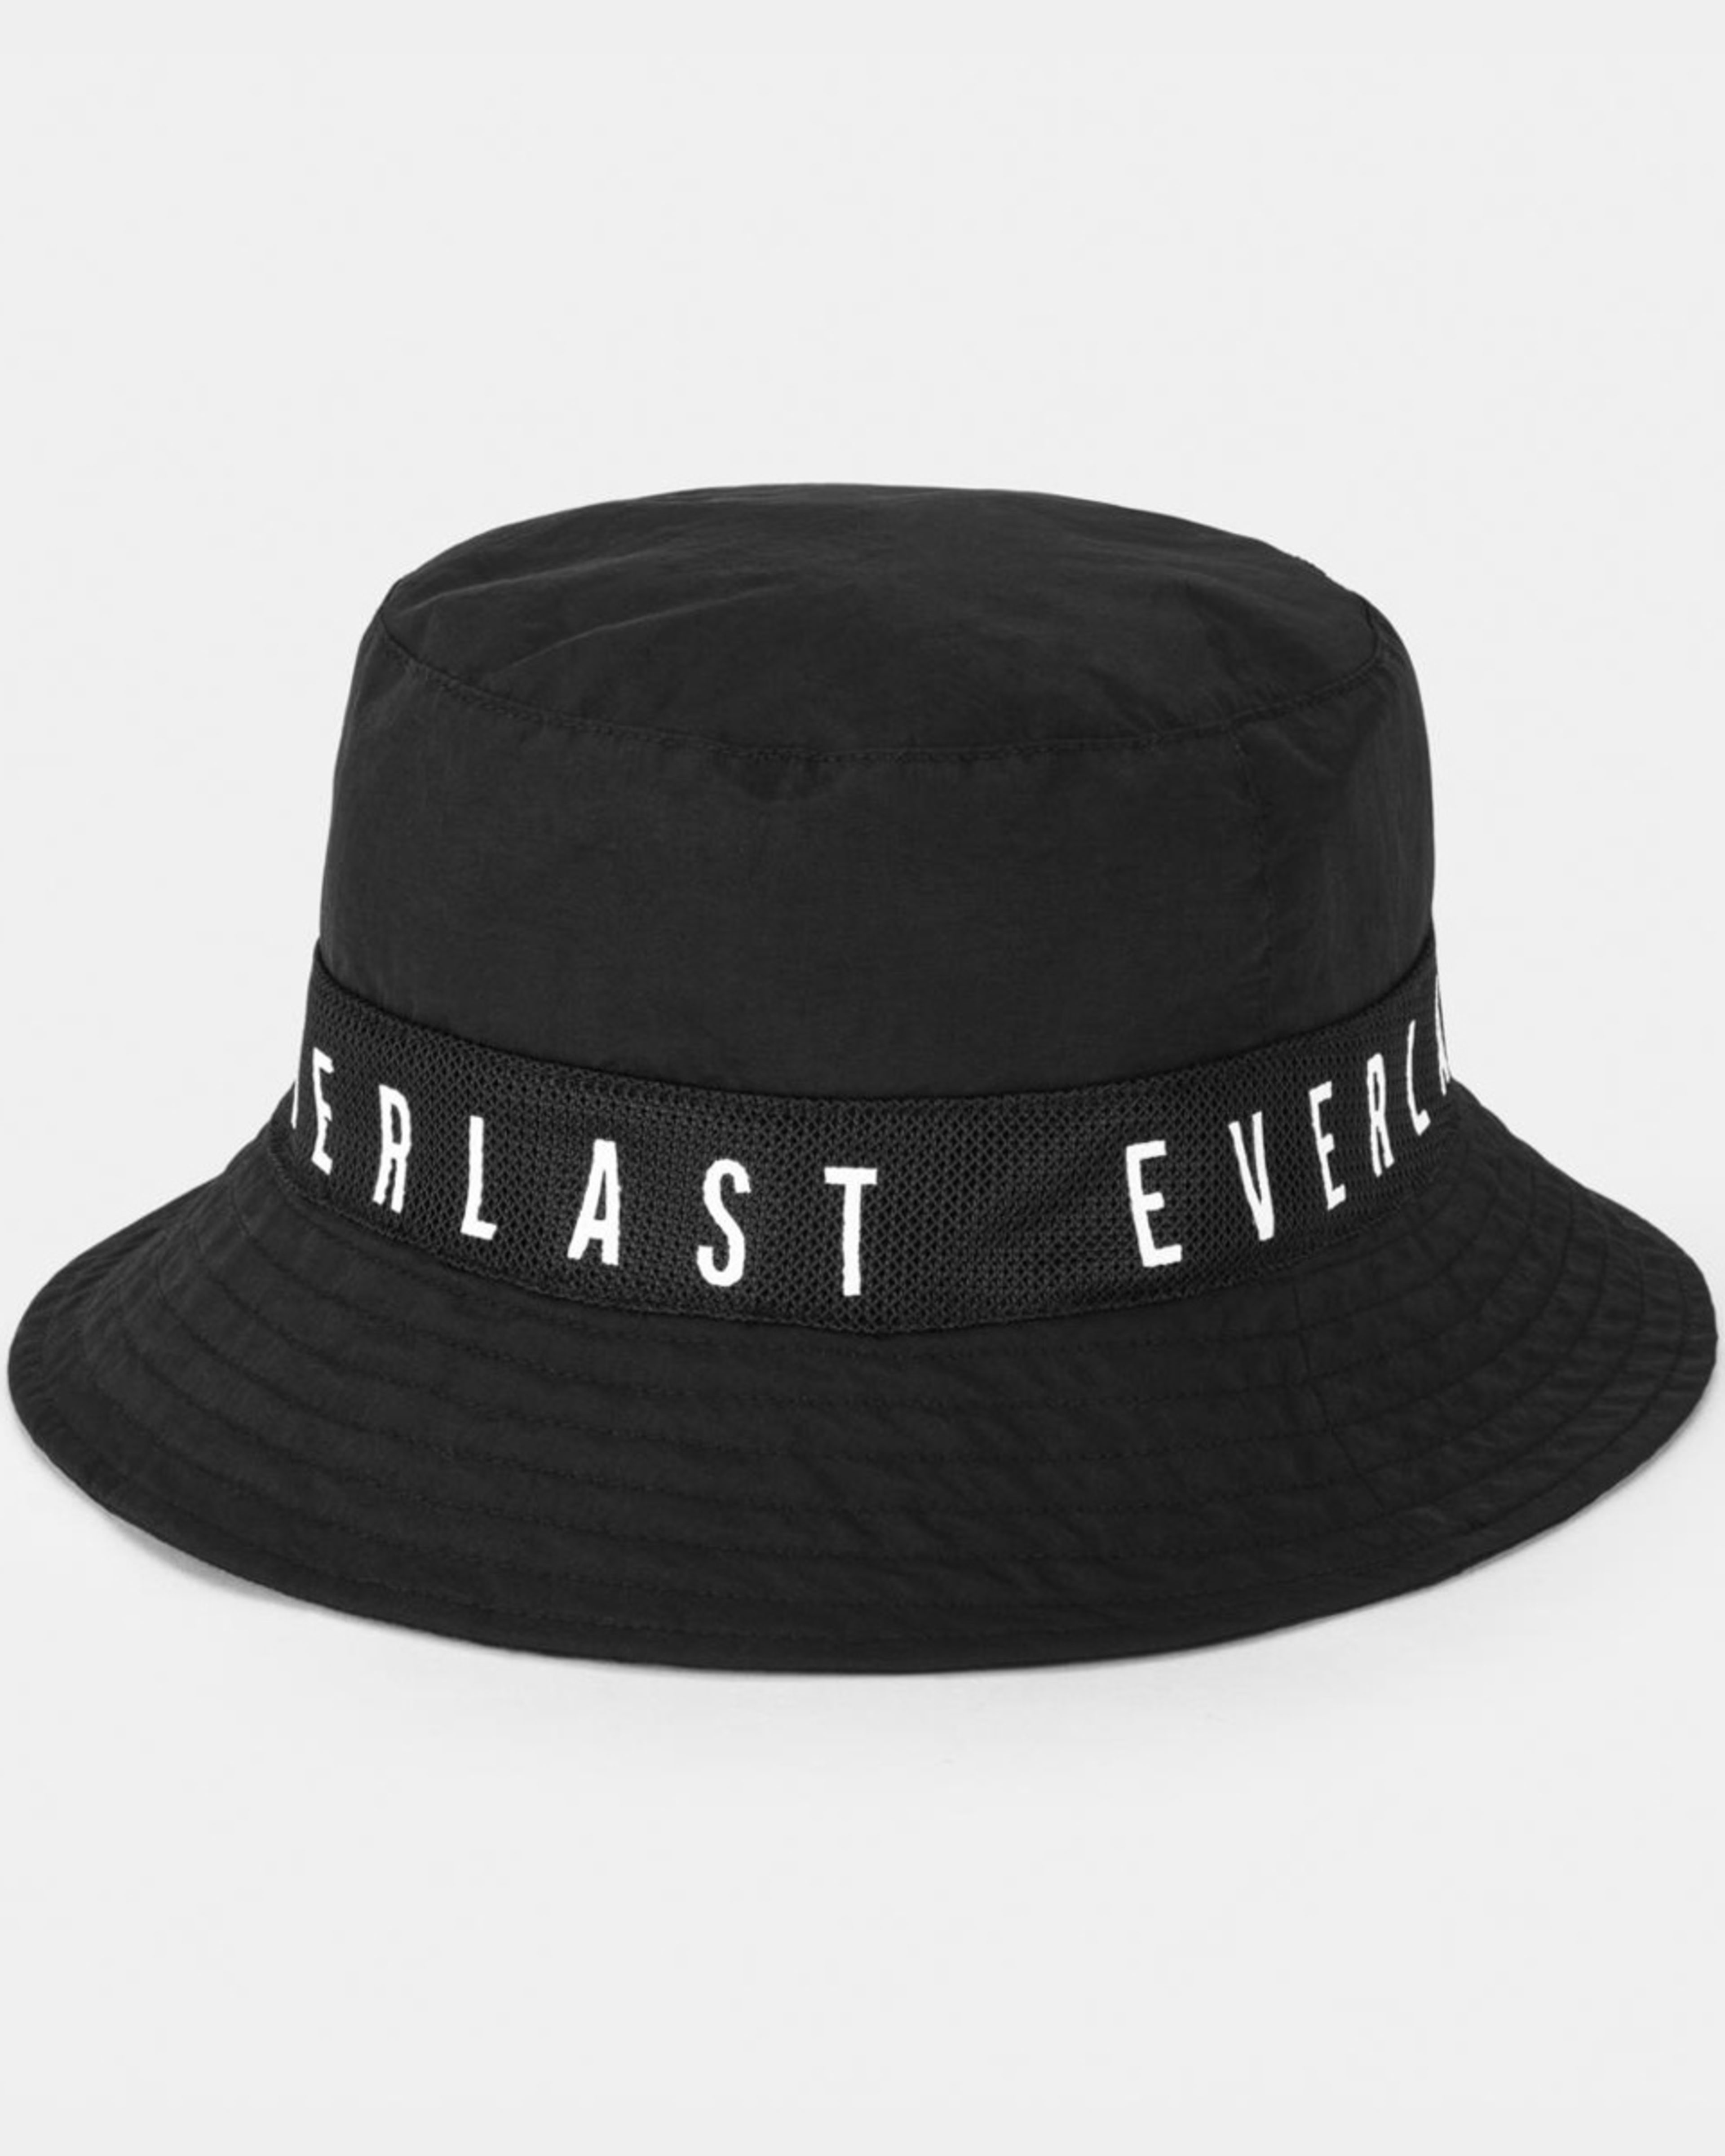 Active Everlast Hudson Bucket Hat - Kmart